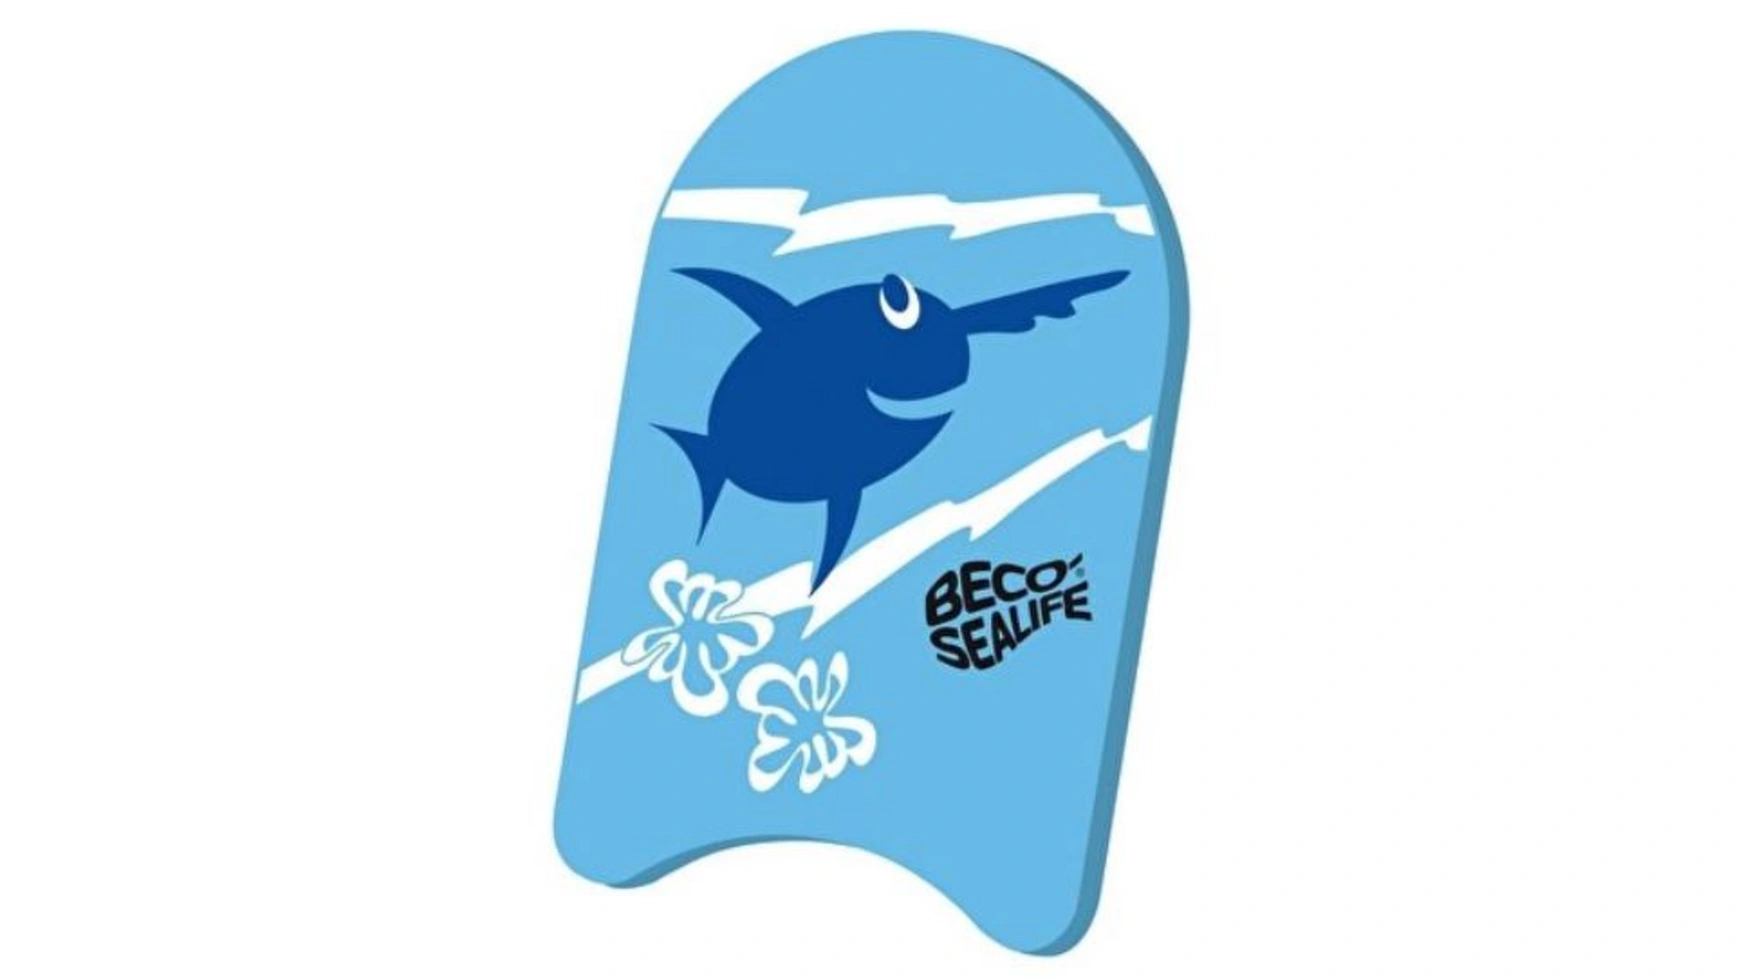 Beco Доска для плавания Sealife, синяя